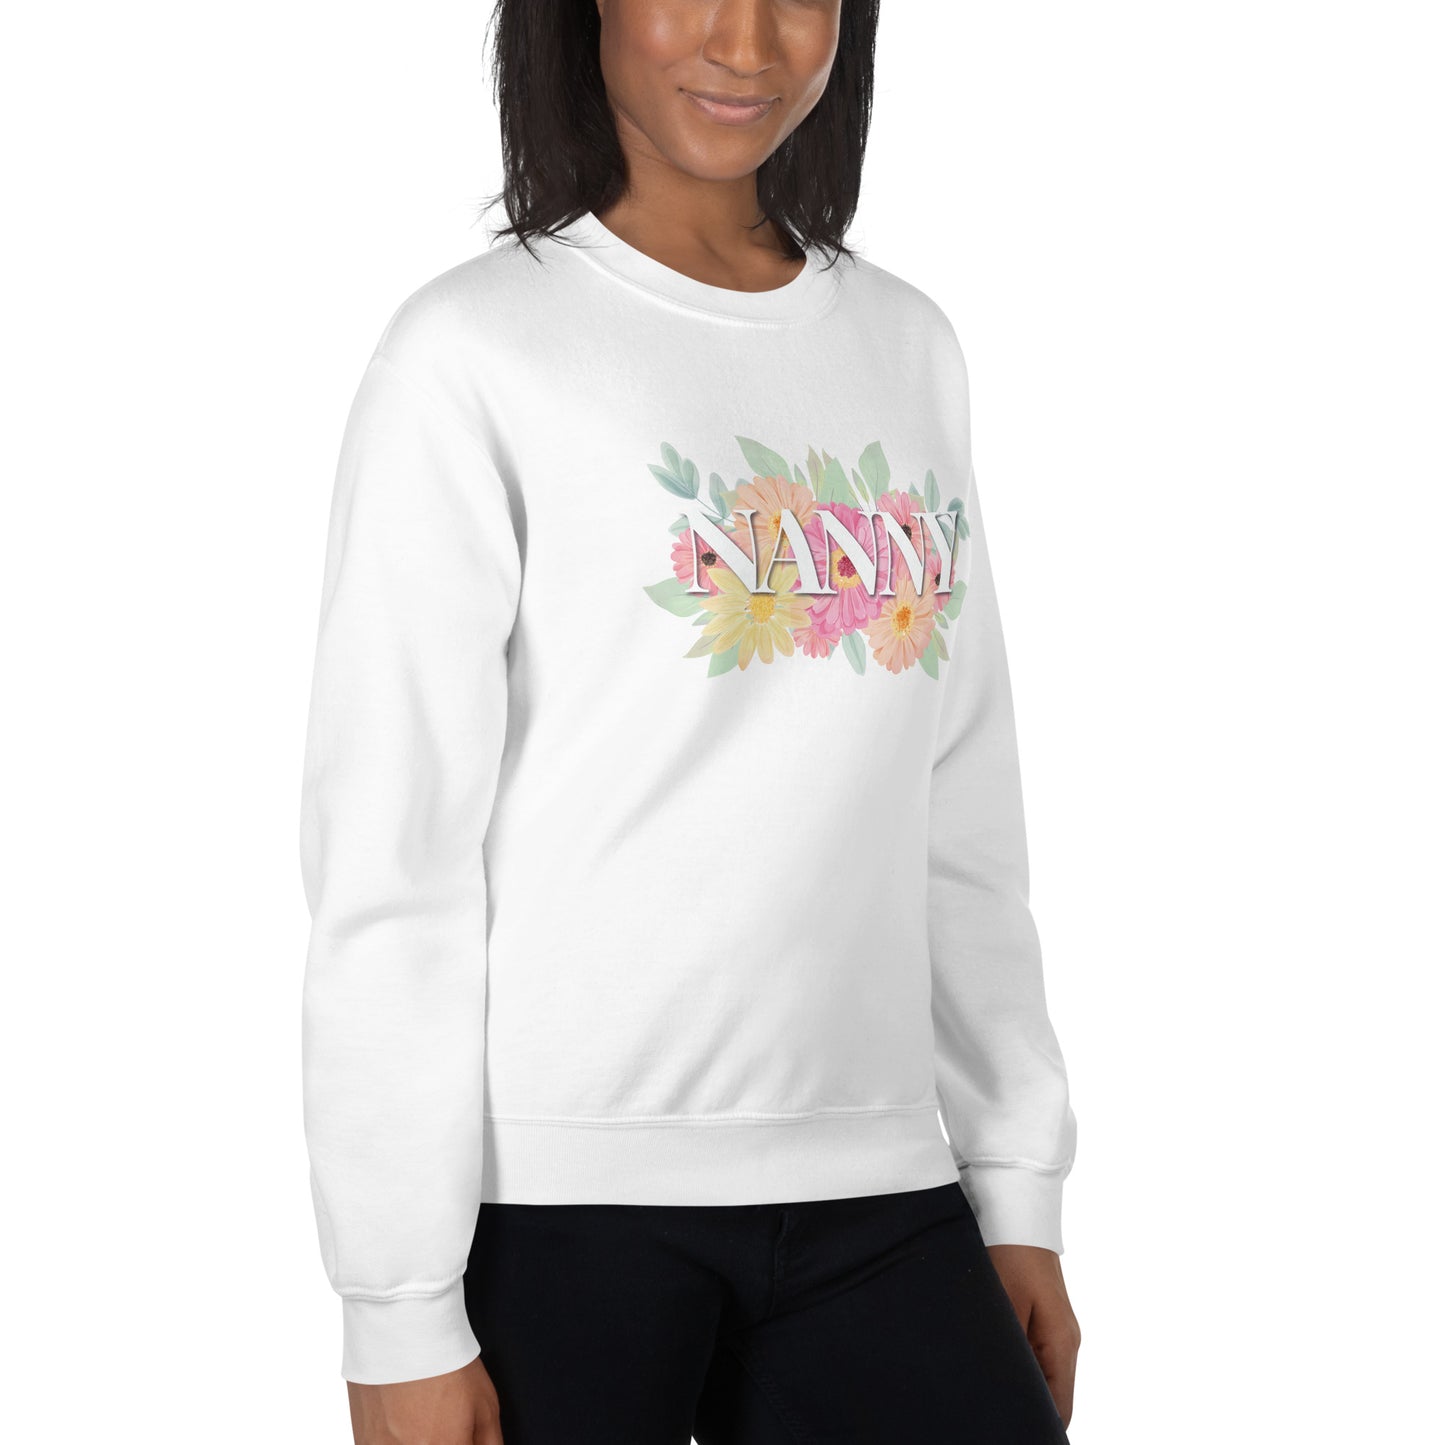 Nanny floral Sweatshirt